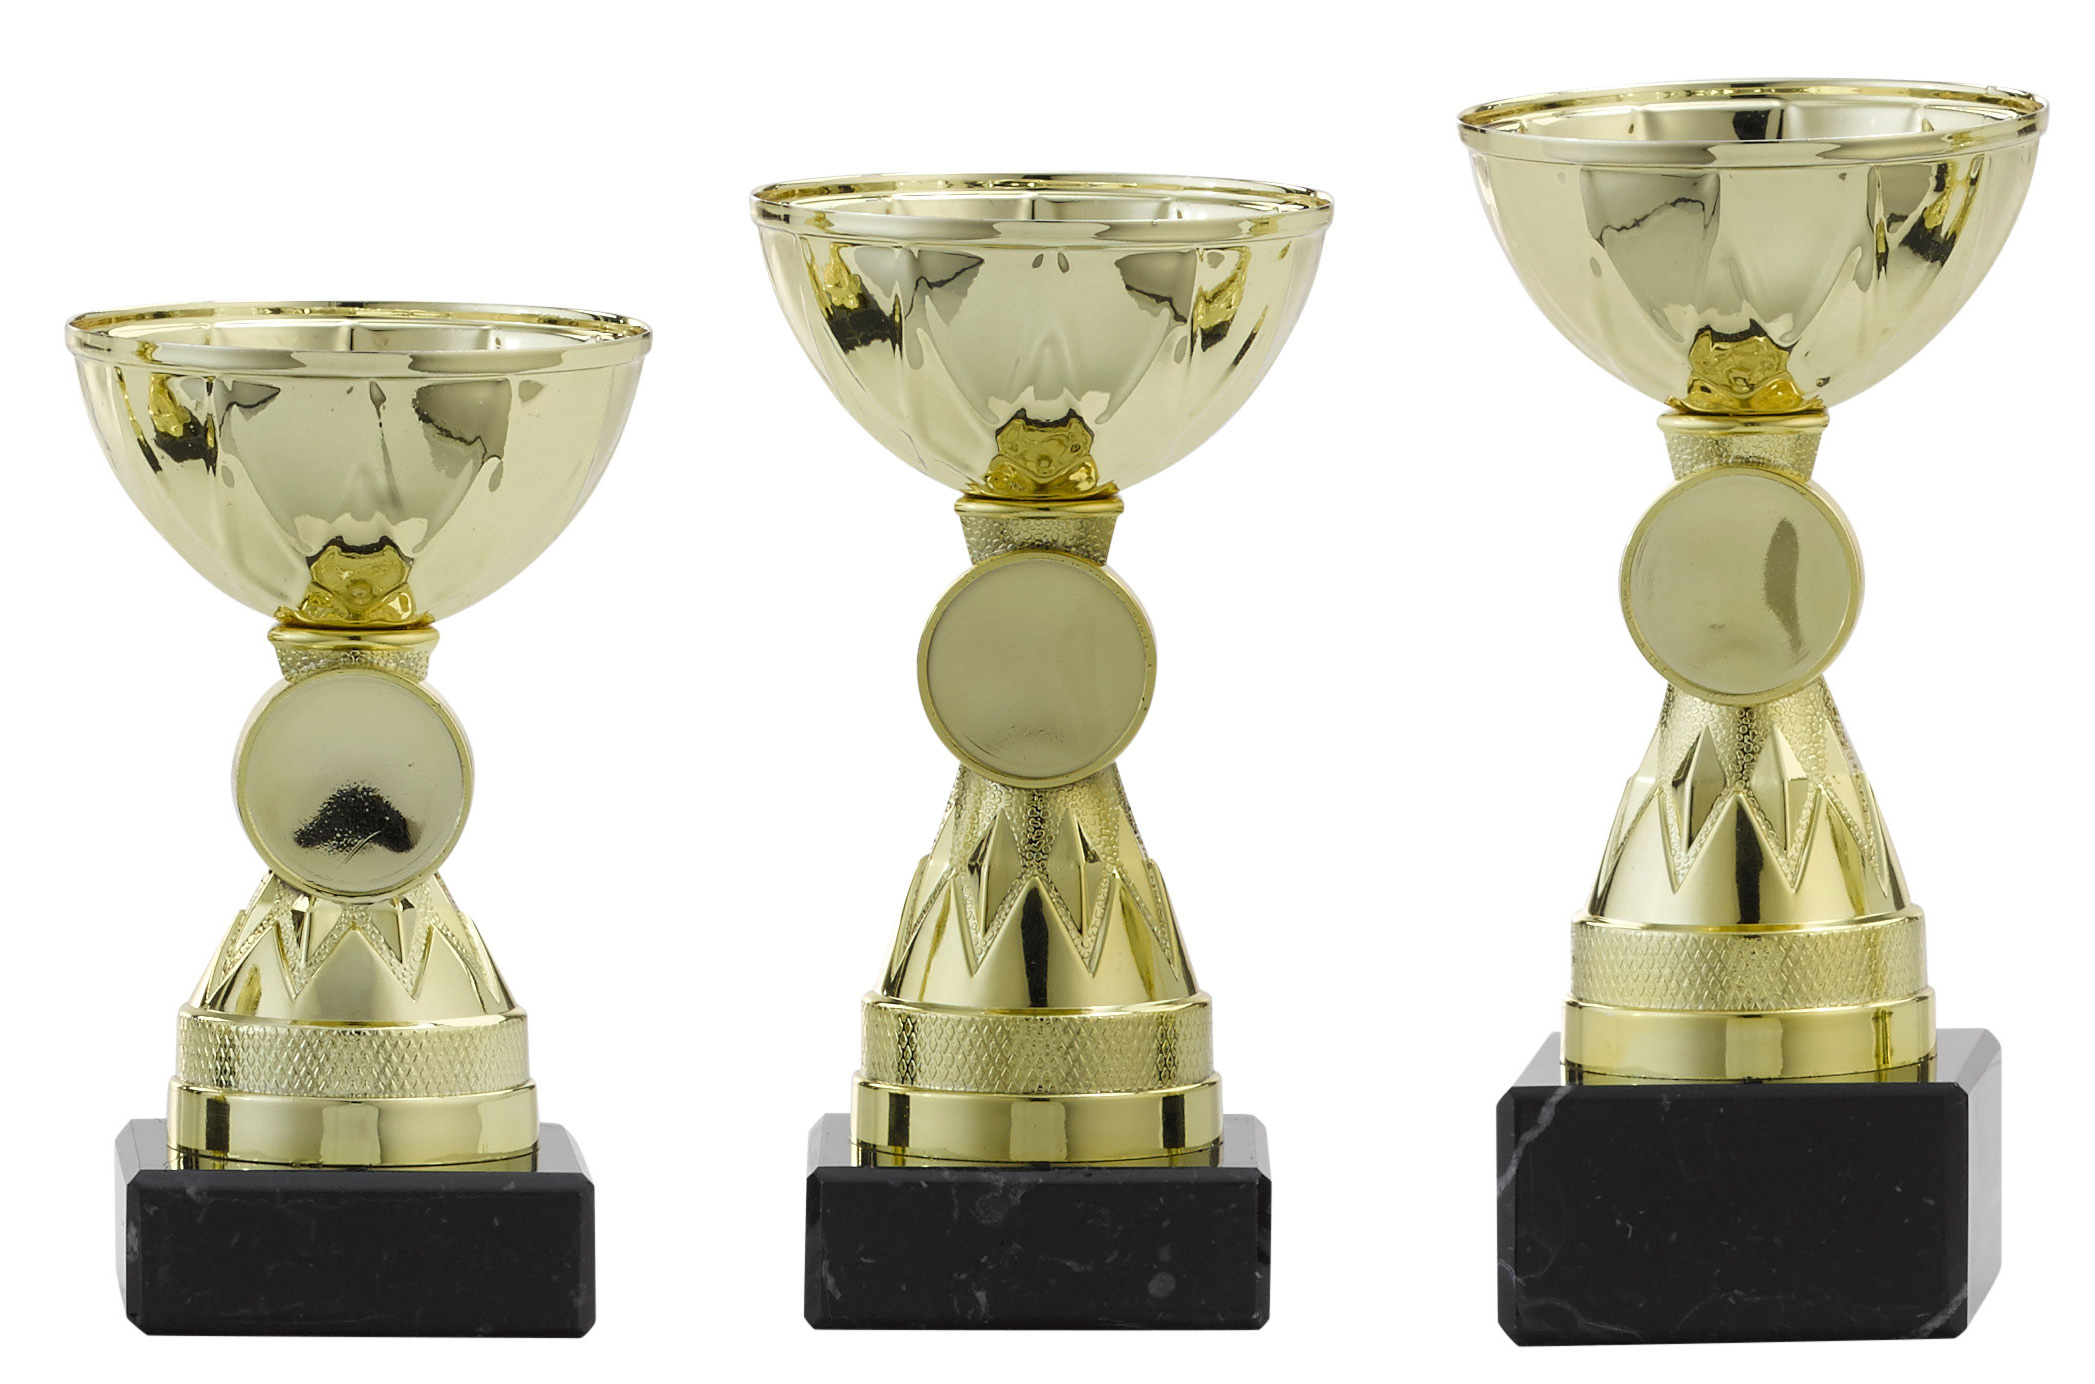 Pokal S1212 inkl. Gravur und Emblem 3er Serie je Höhe ein Pokal